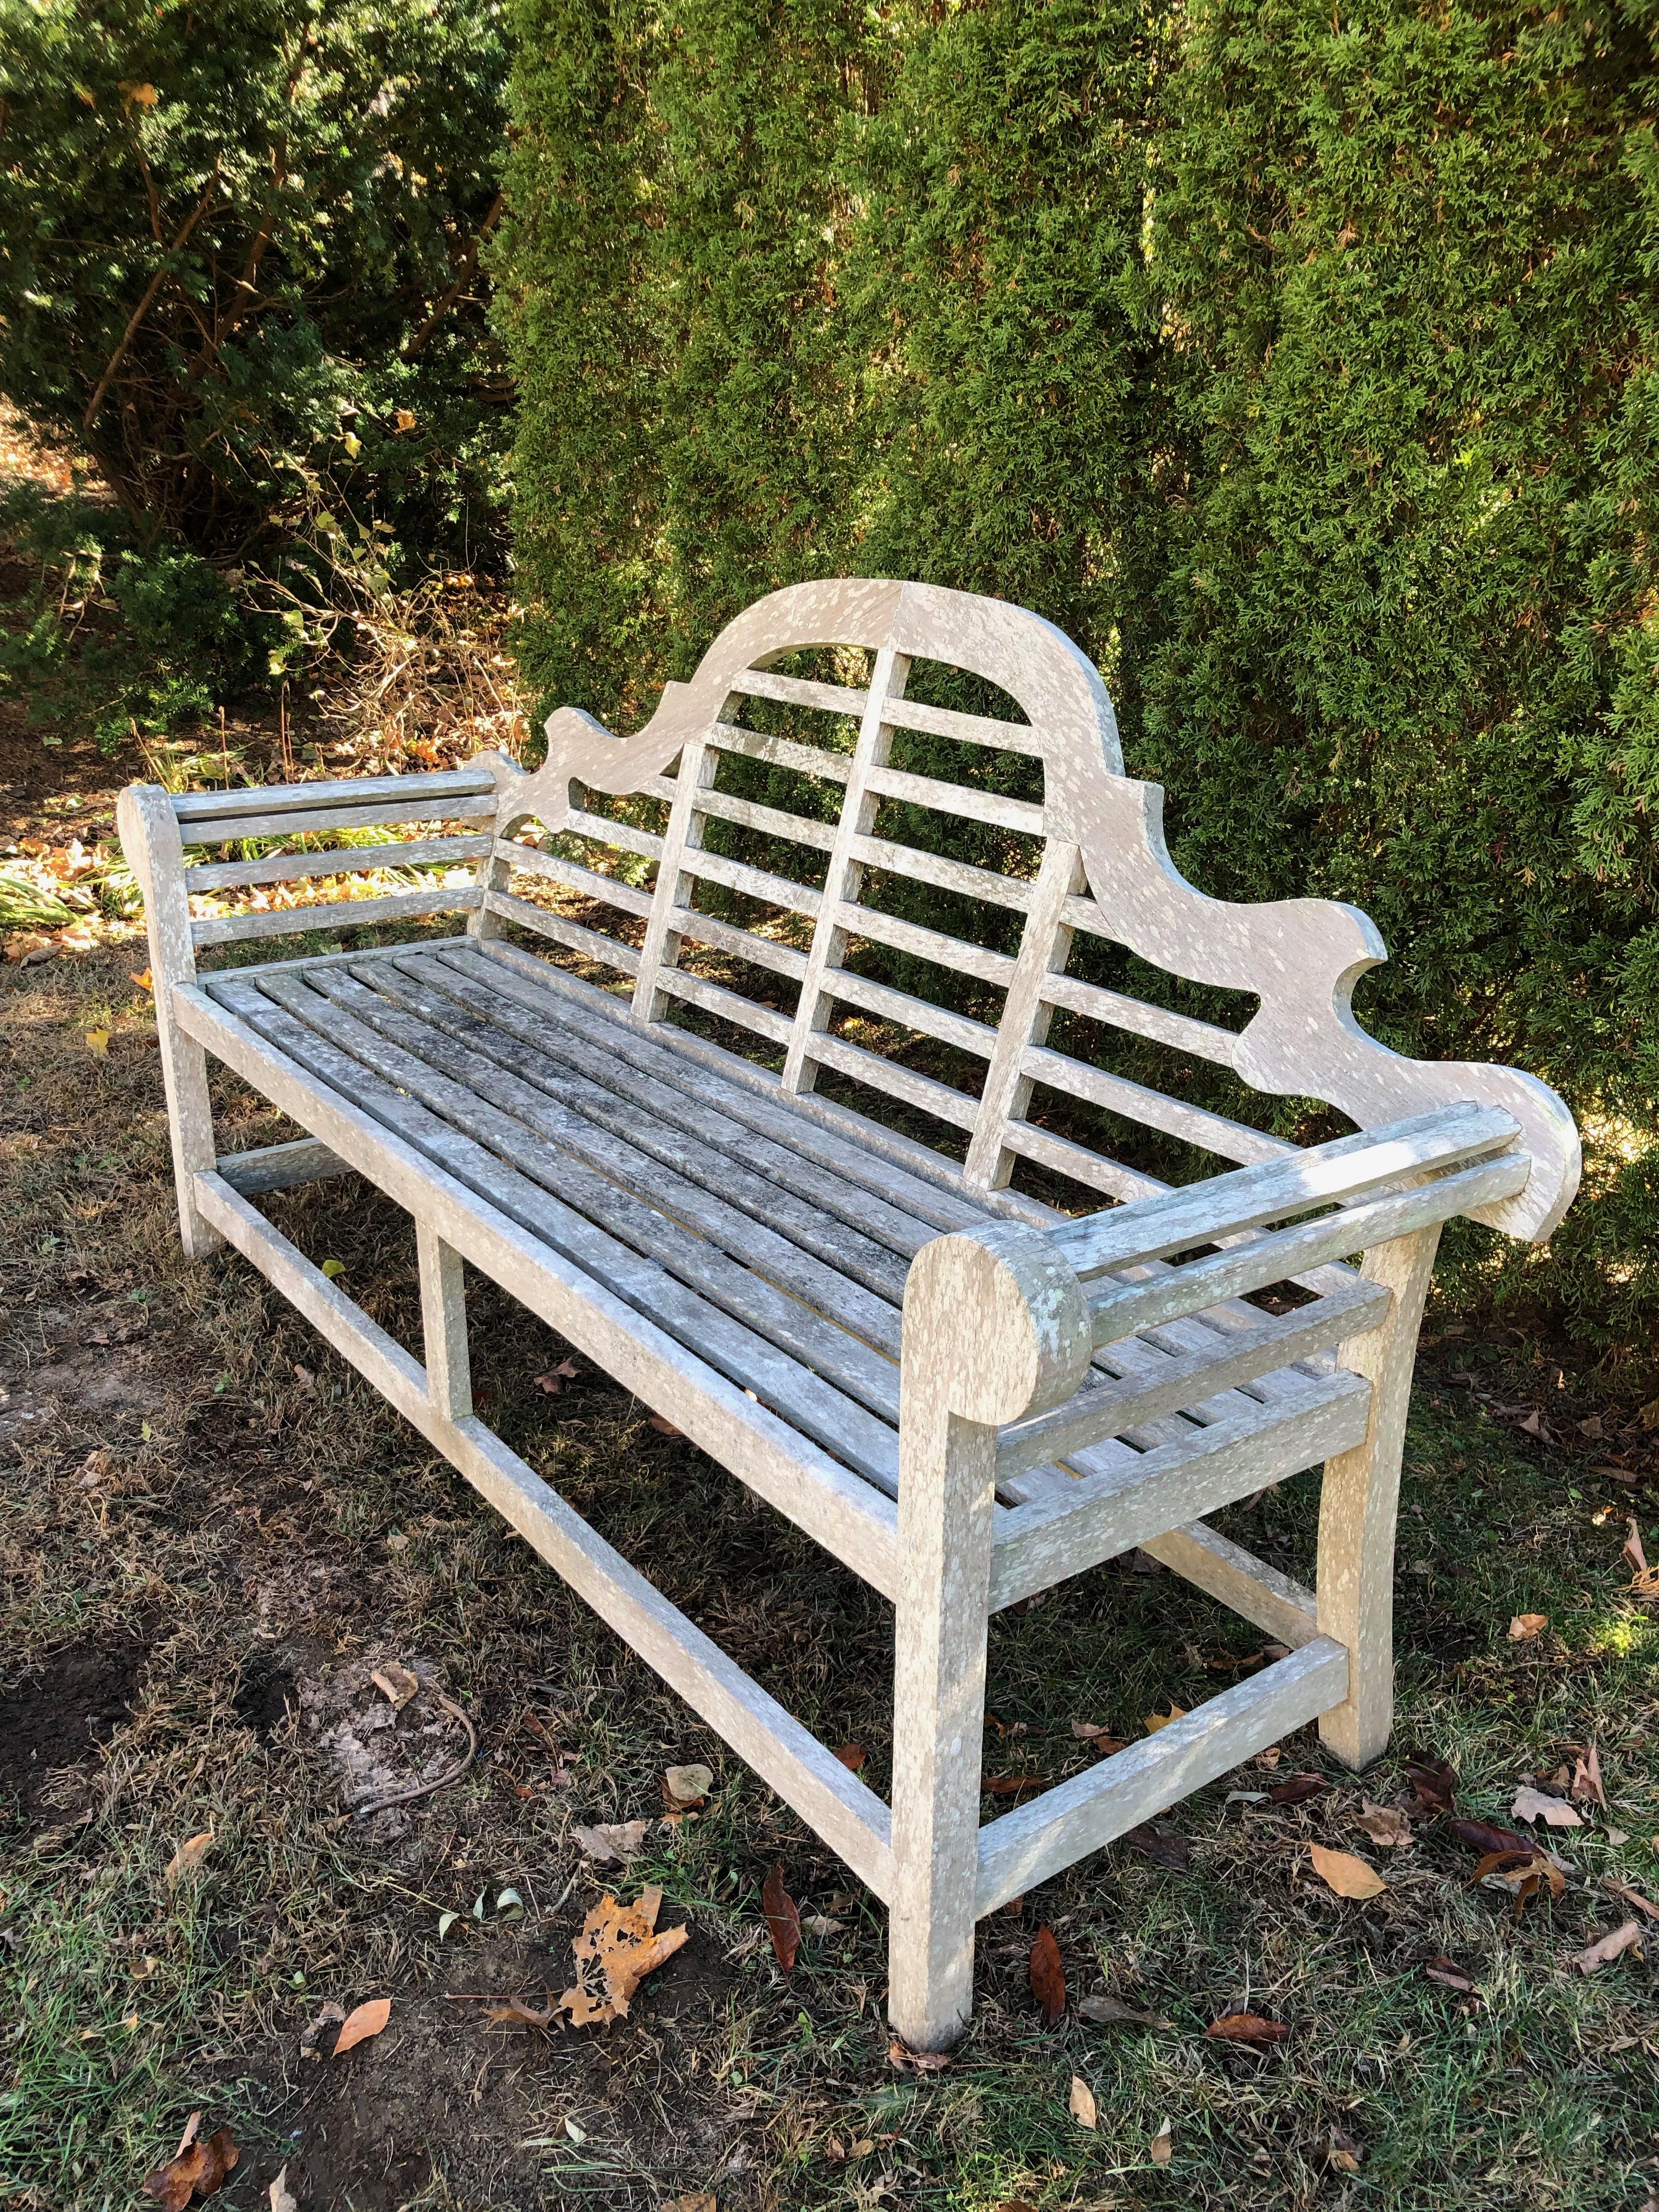 lutyens bench original design